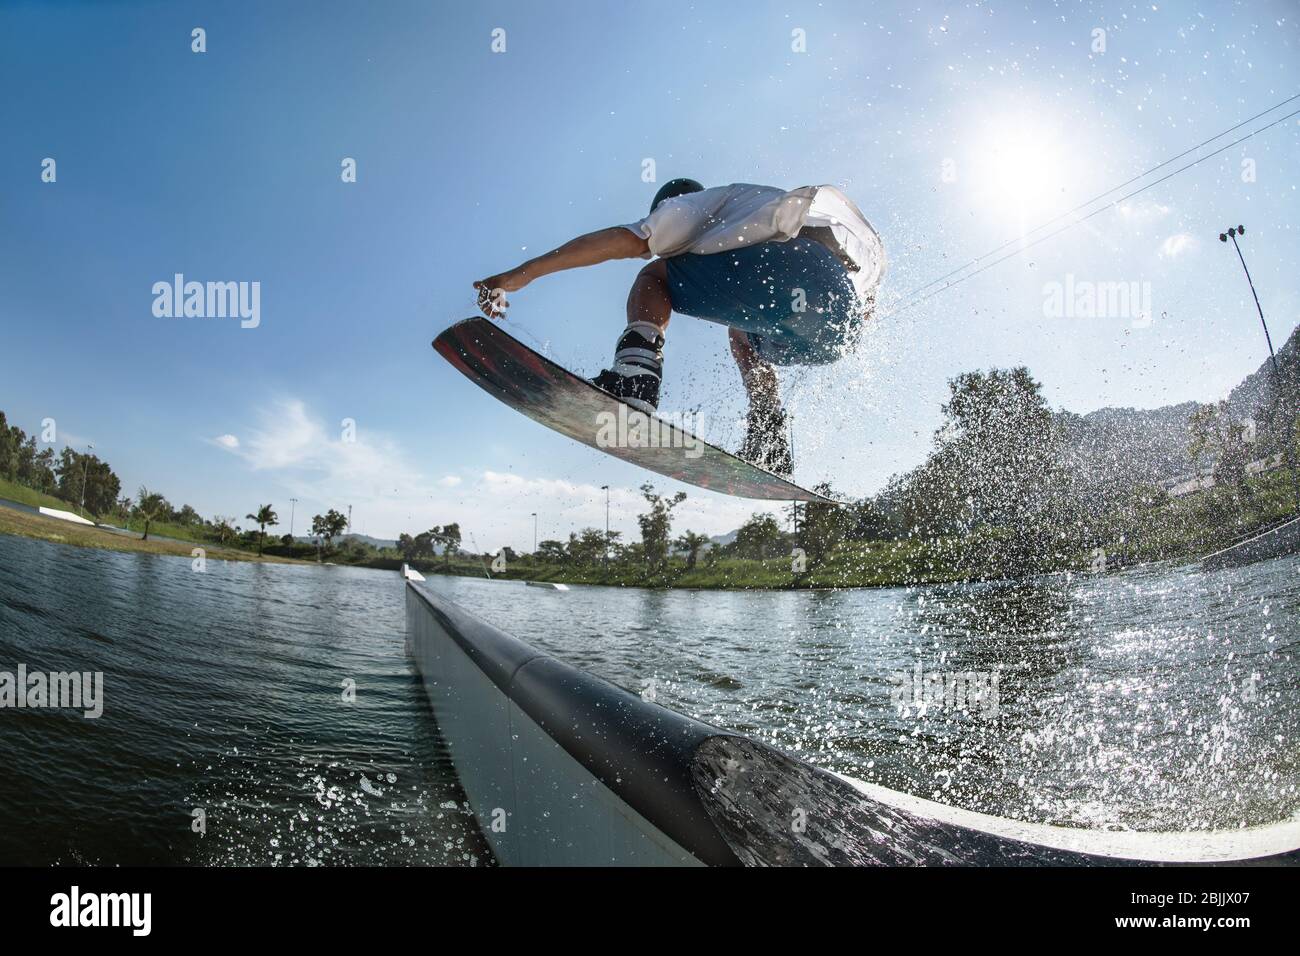 Ma wakeboarder jumps at ramp at wake park Stock Photo